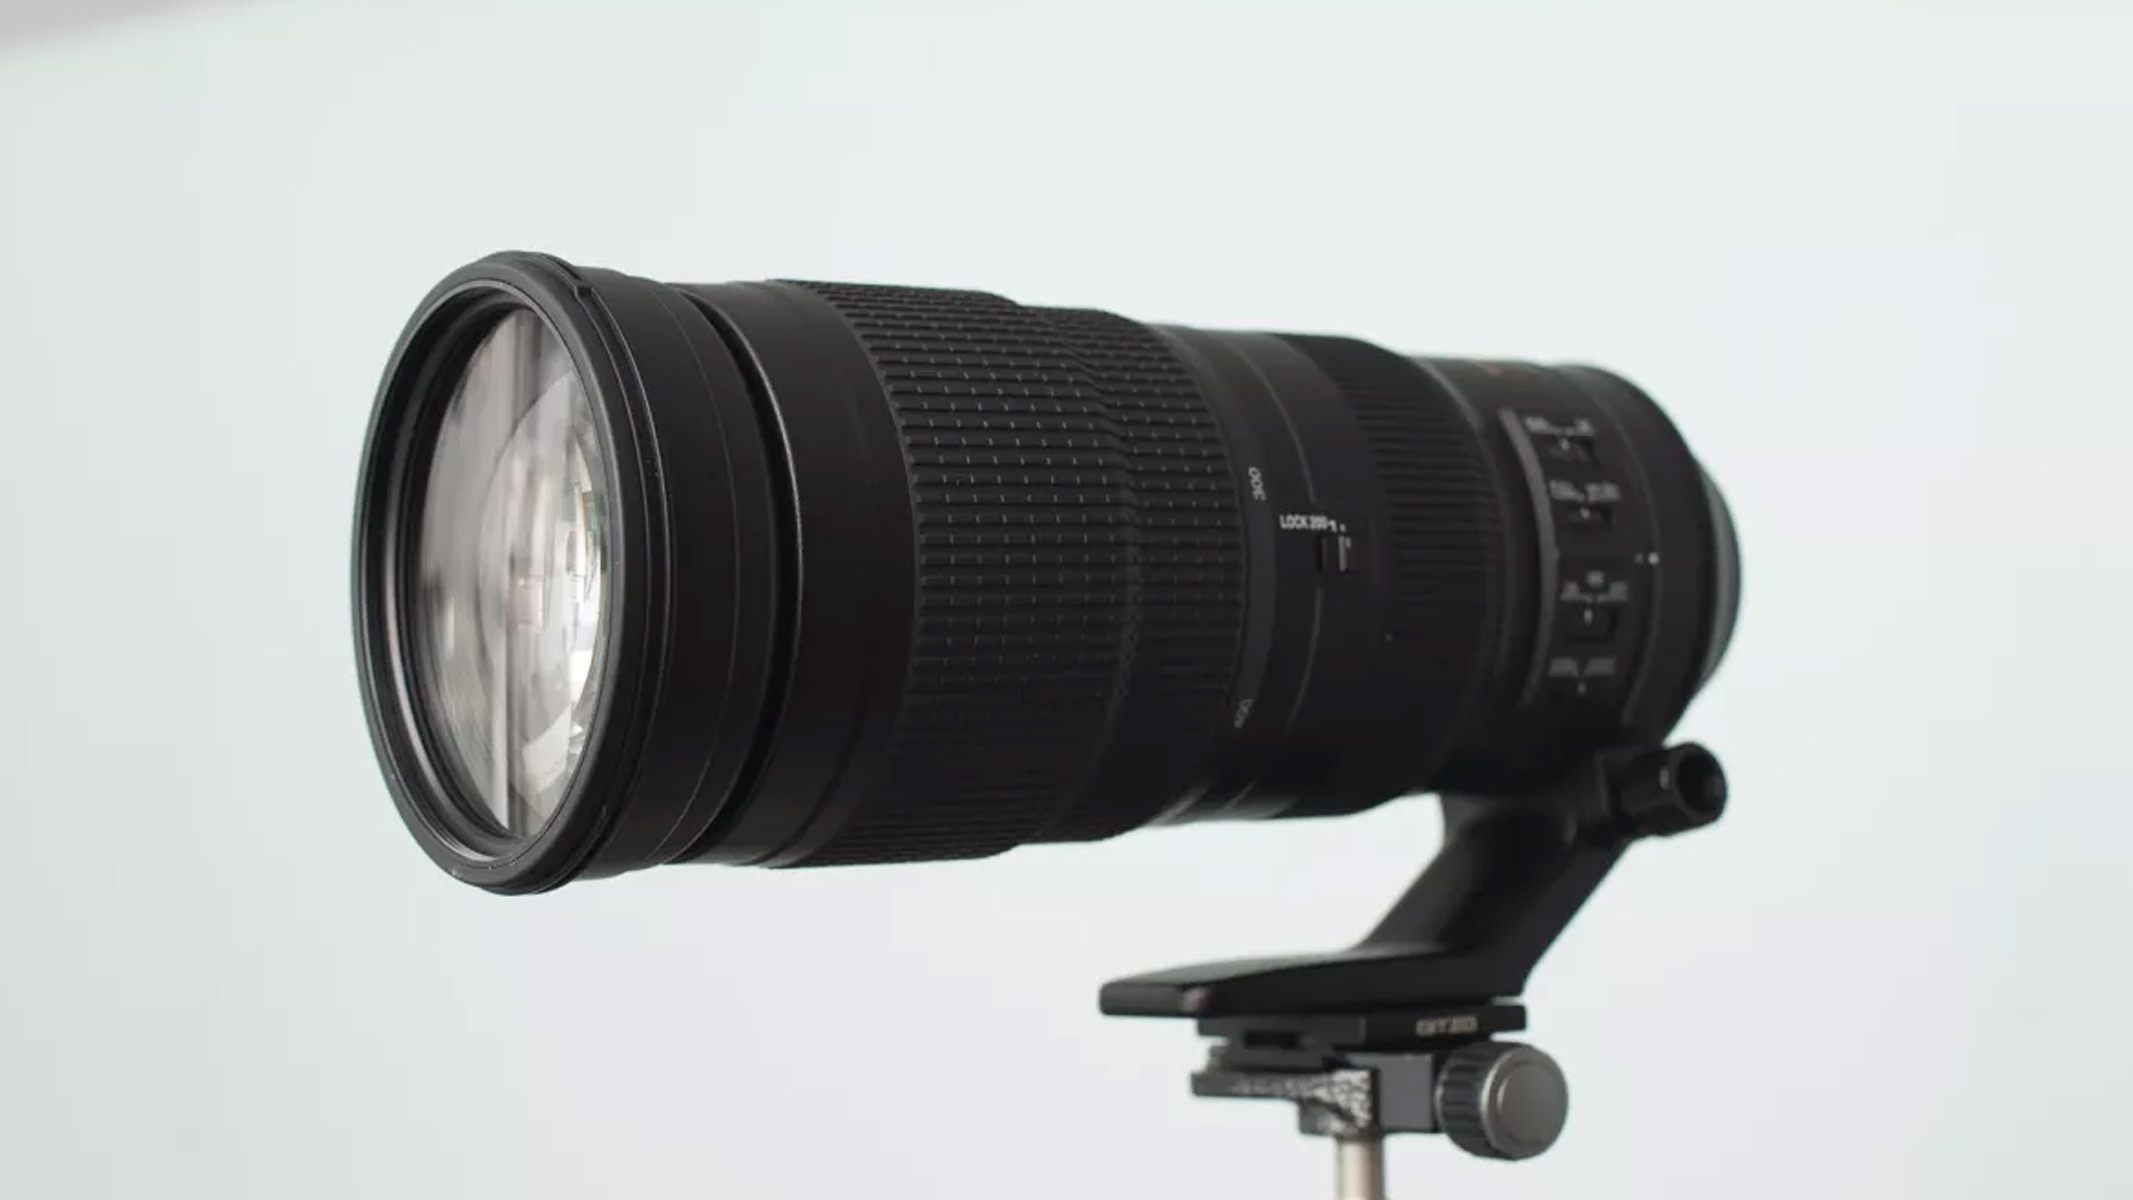 Nikkor AF-S 200-500mm f/5.6E ED VR lens on a tripod with a blue background